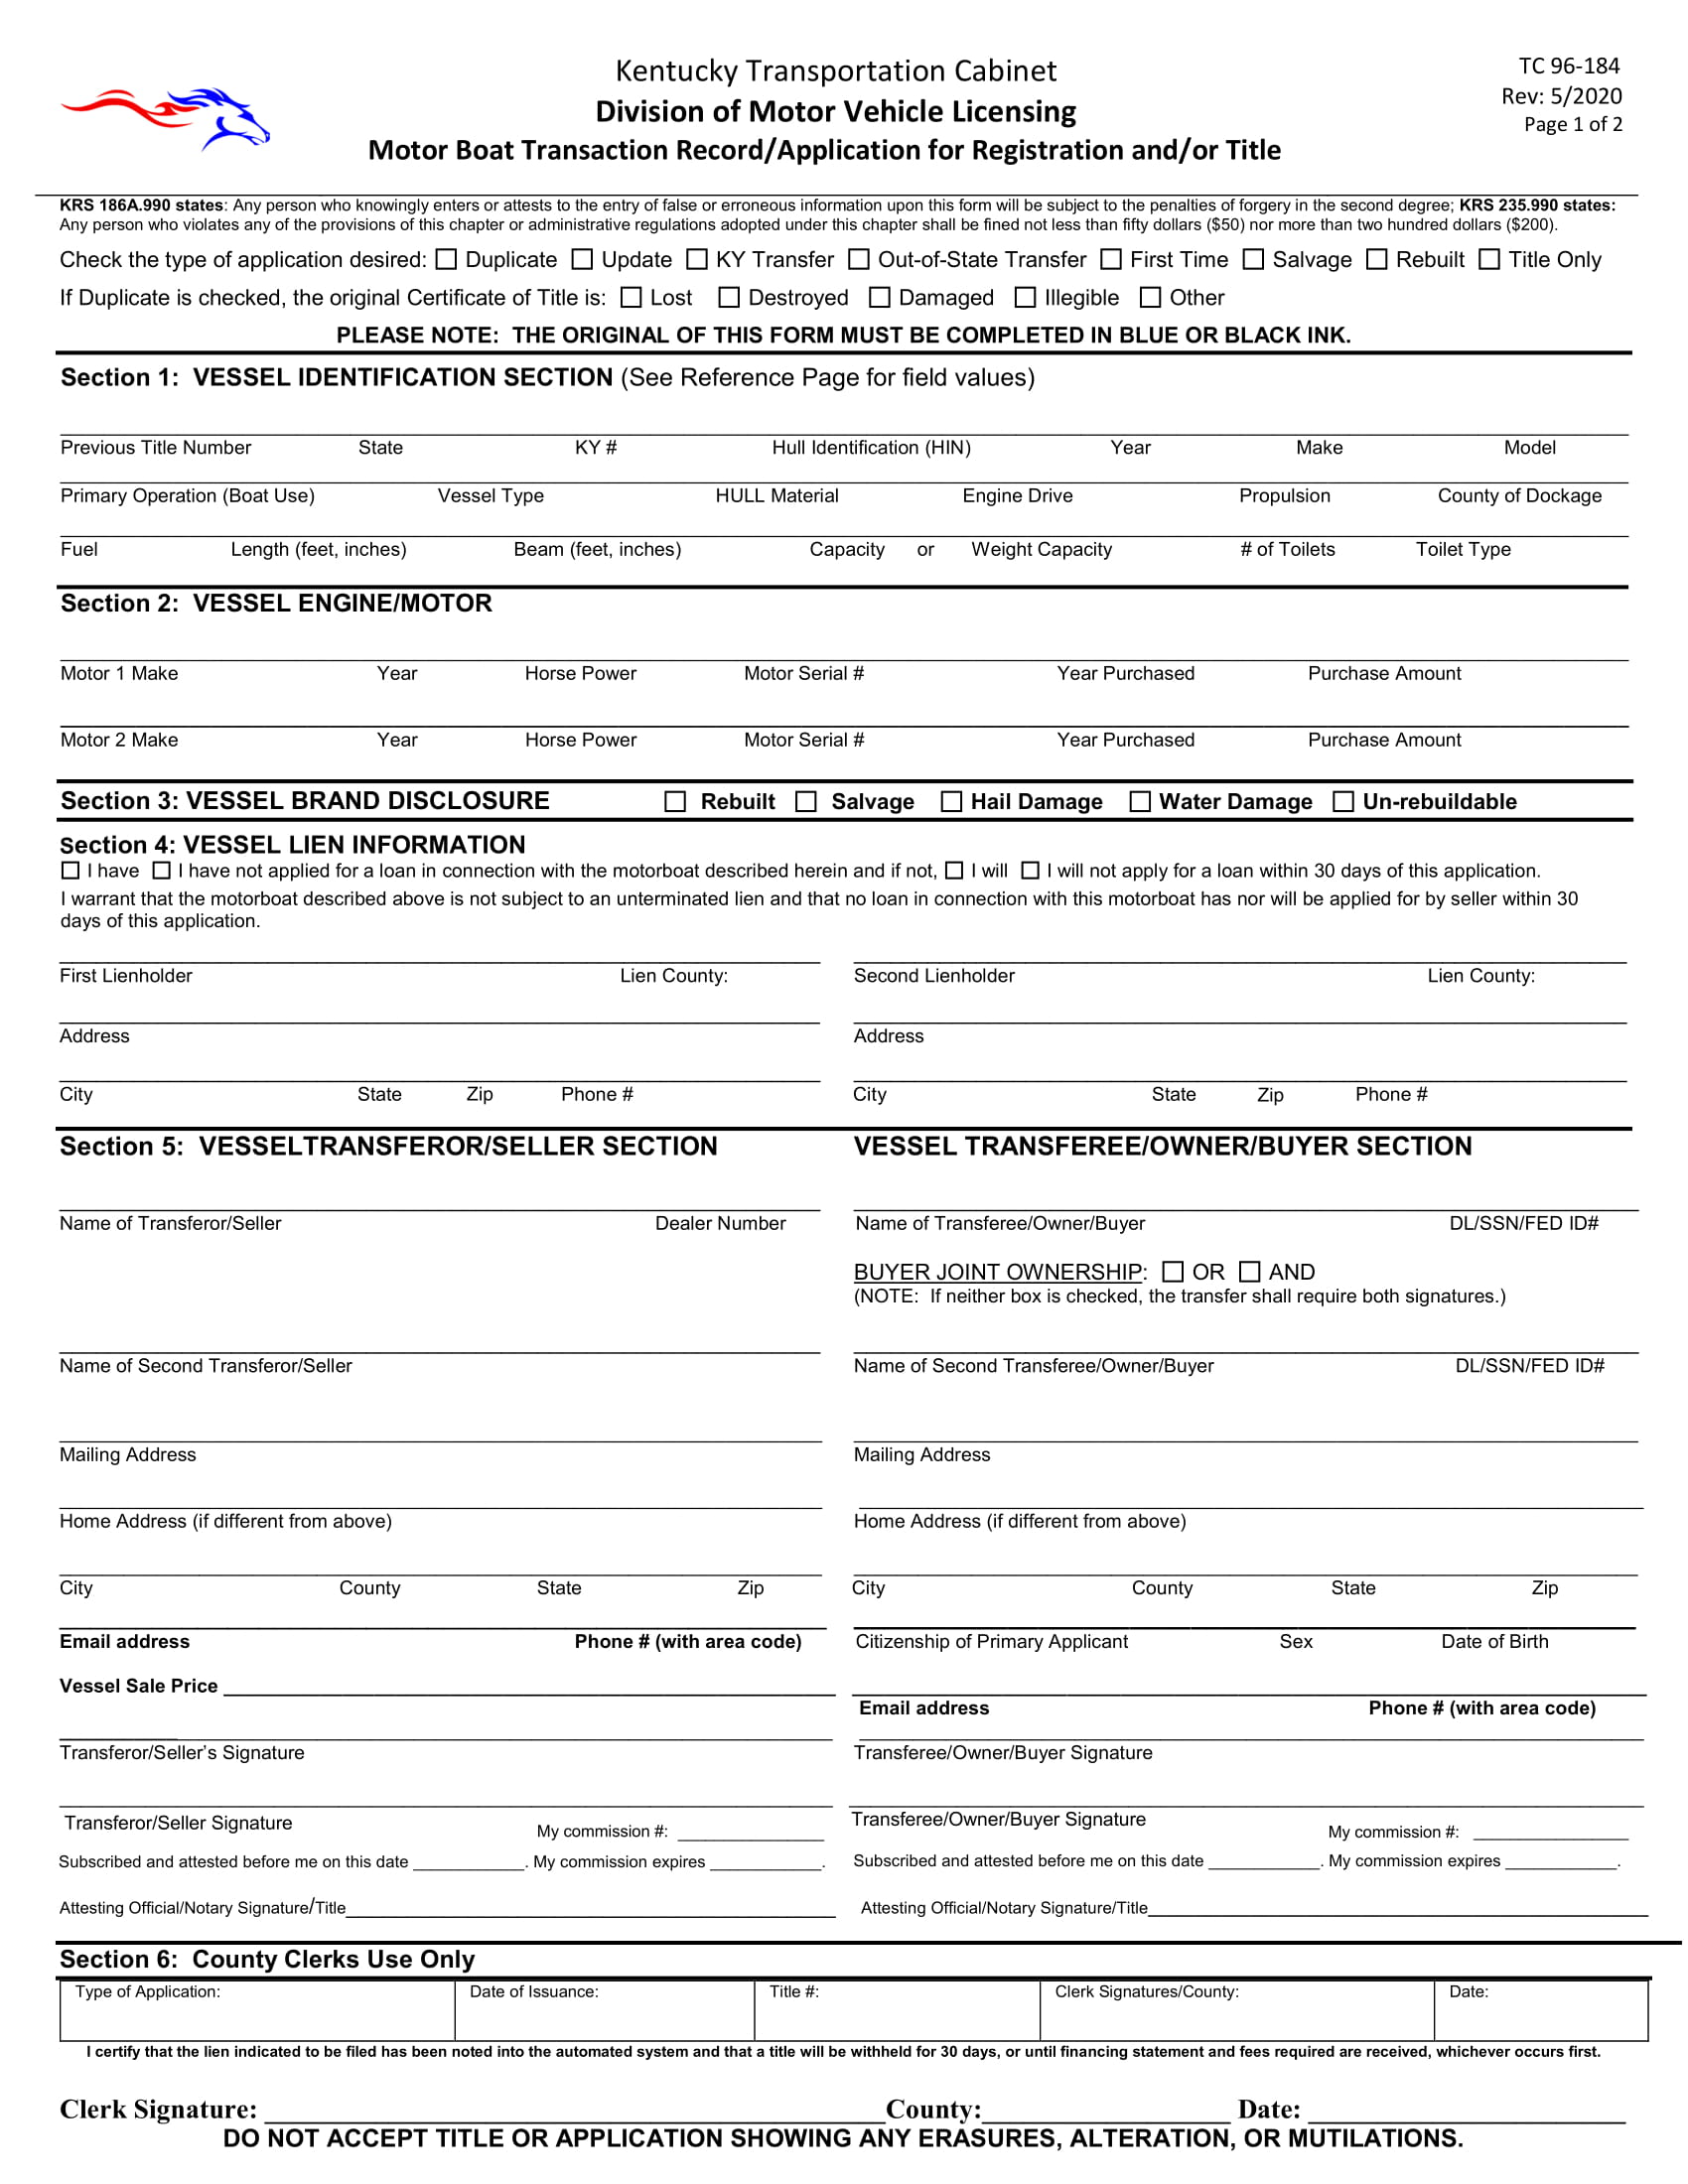 Fillable Kentucky Bill of Sale Form - PDF Templates